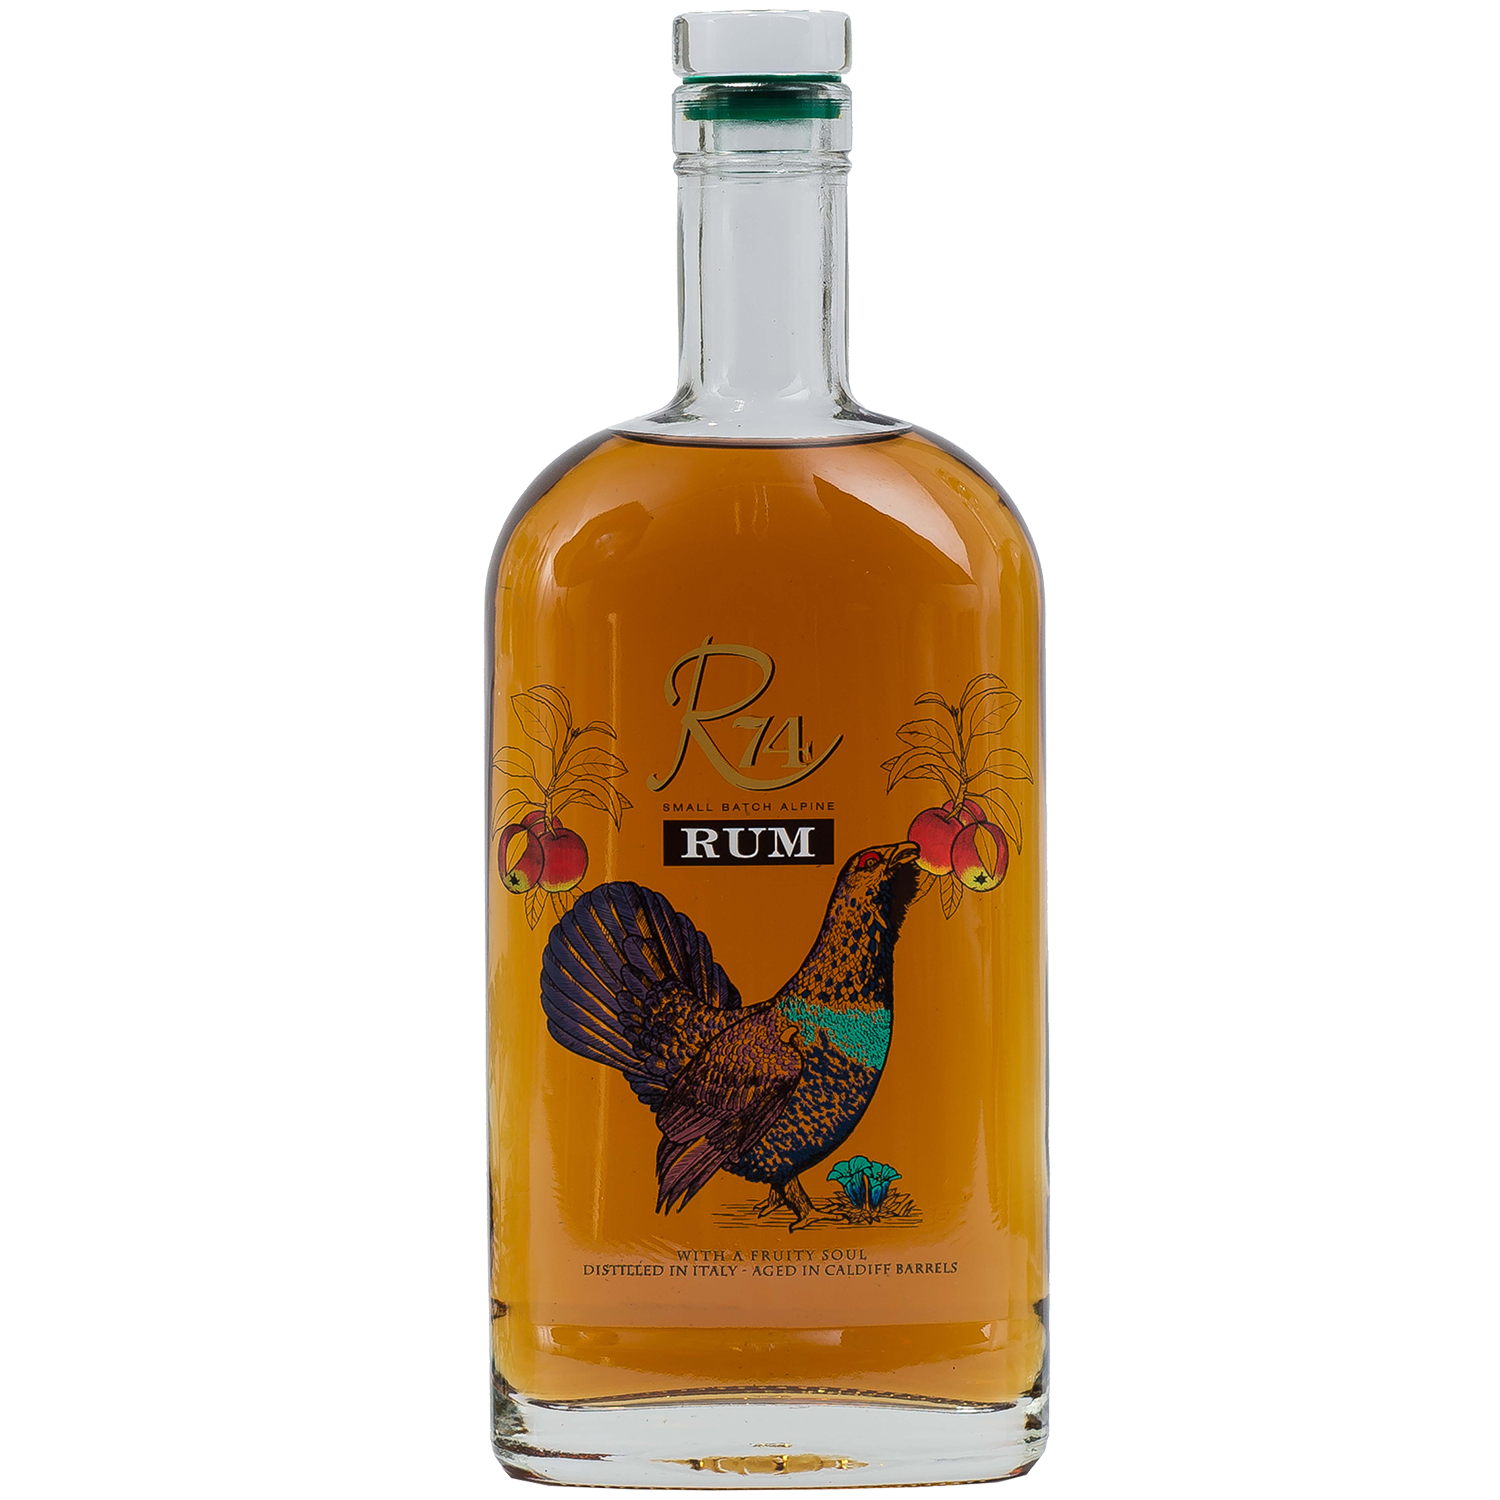 R47 Rum by Roner in 700ml bottle